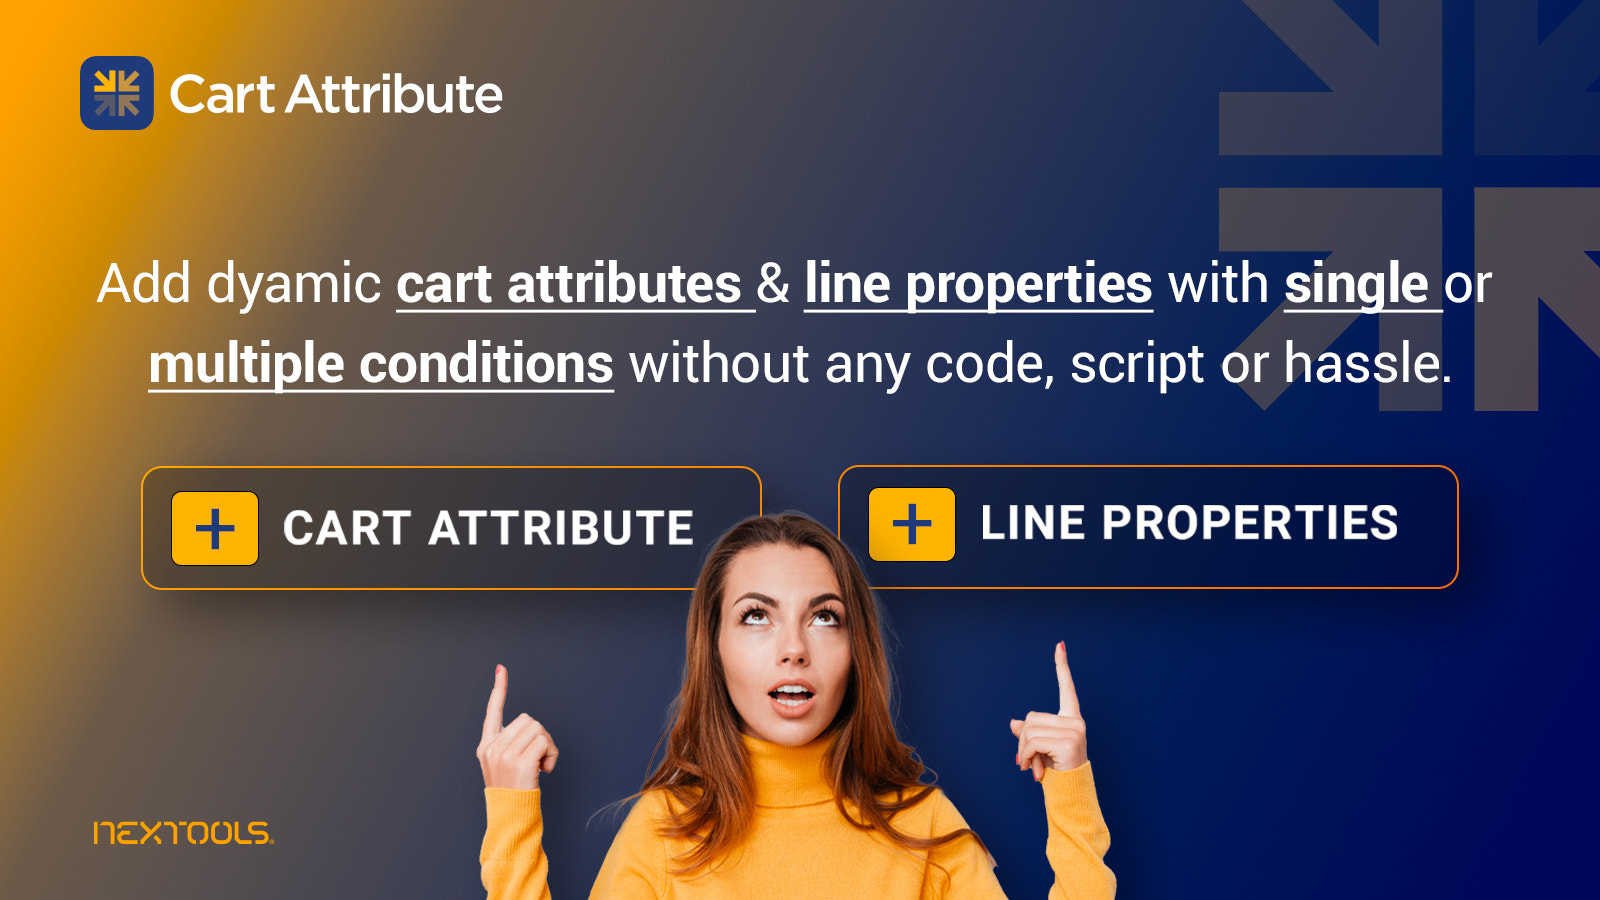 Add dyamic cart attributes & line properties